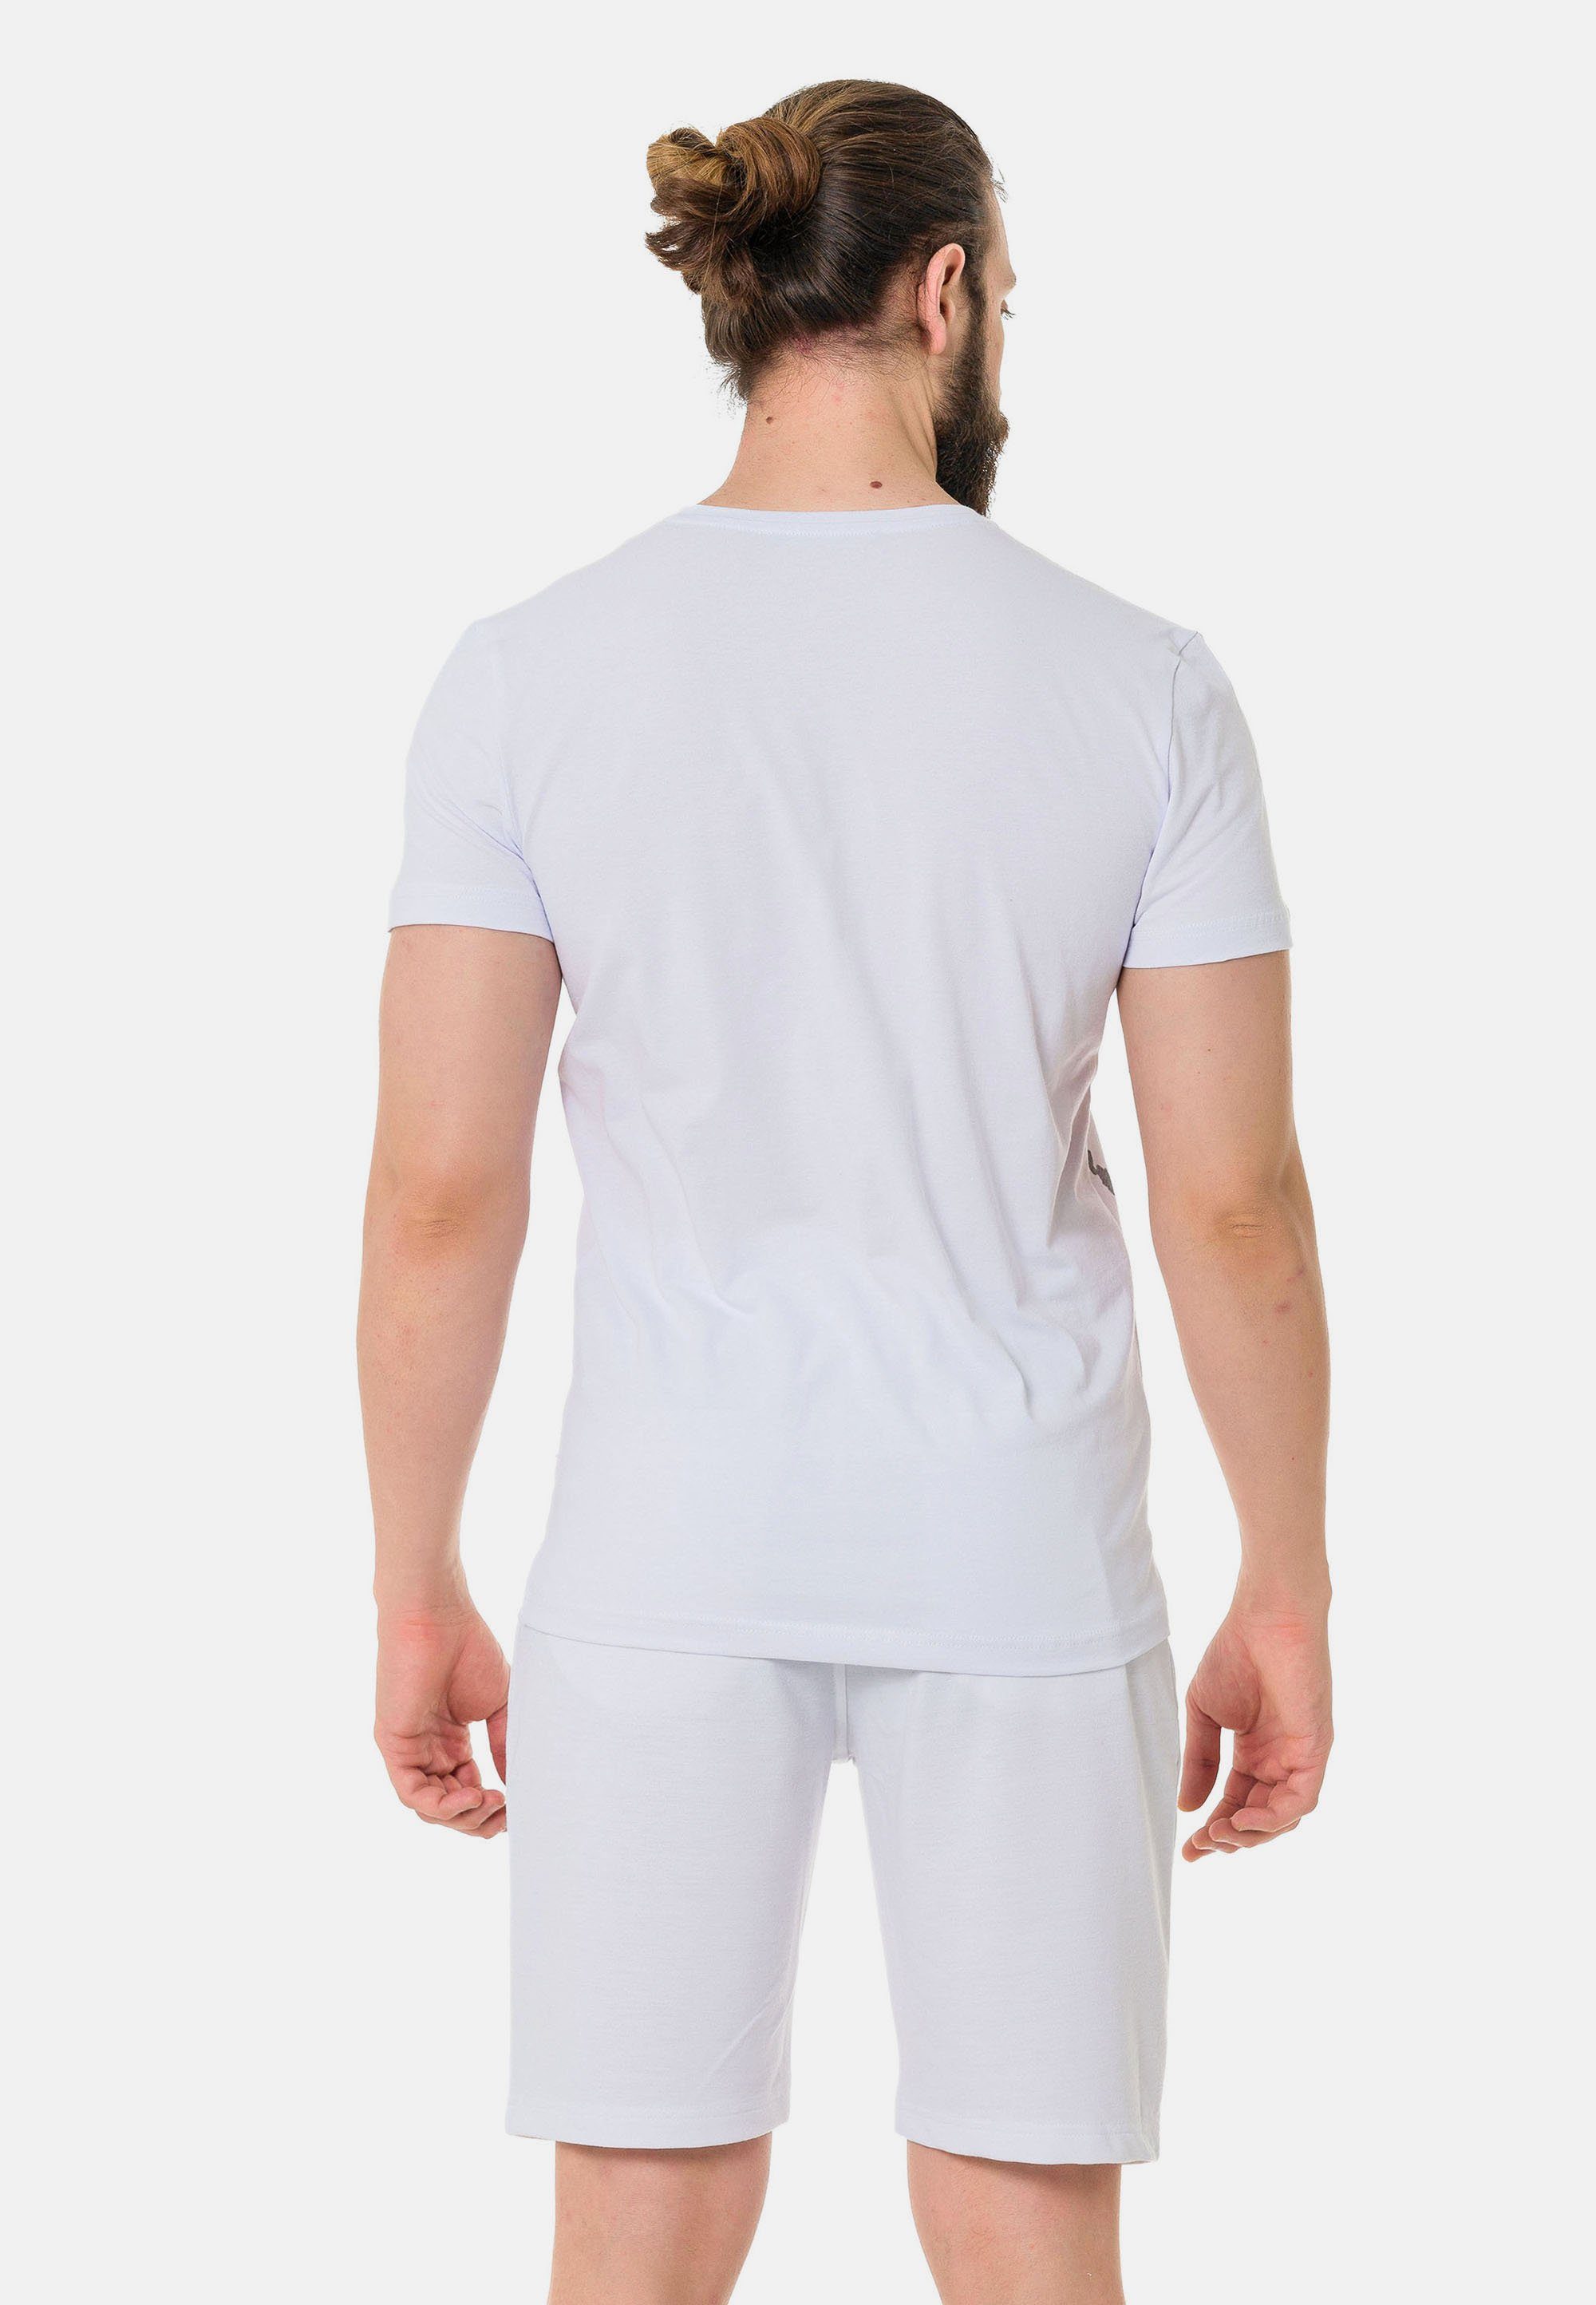 Cipo & Baxx T-Shirt mit Markenprint weiß coolem